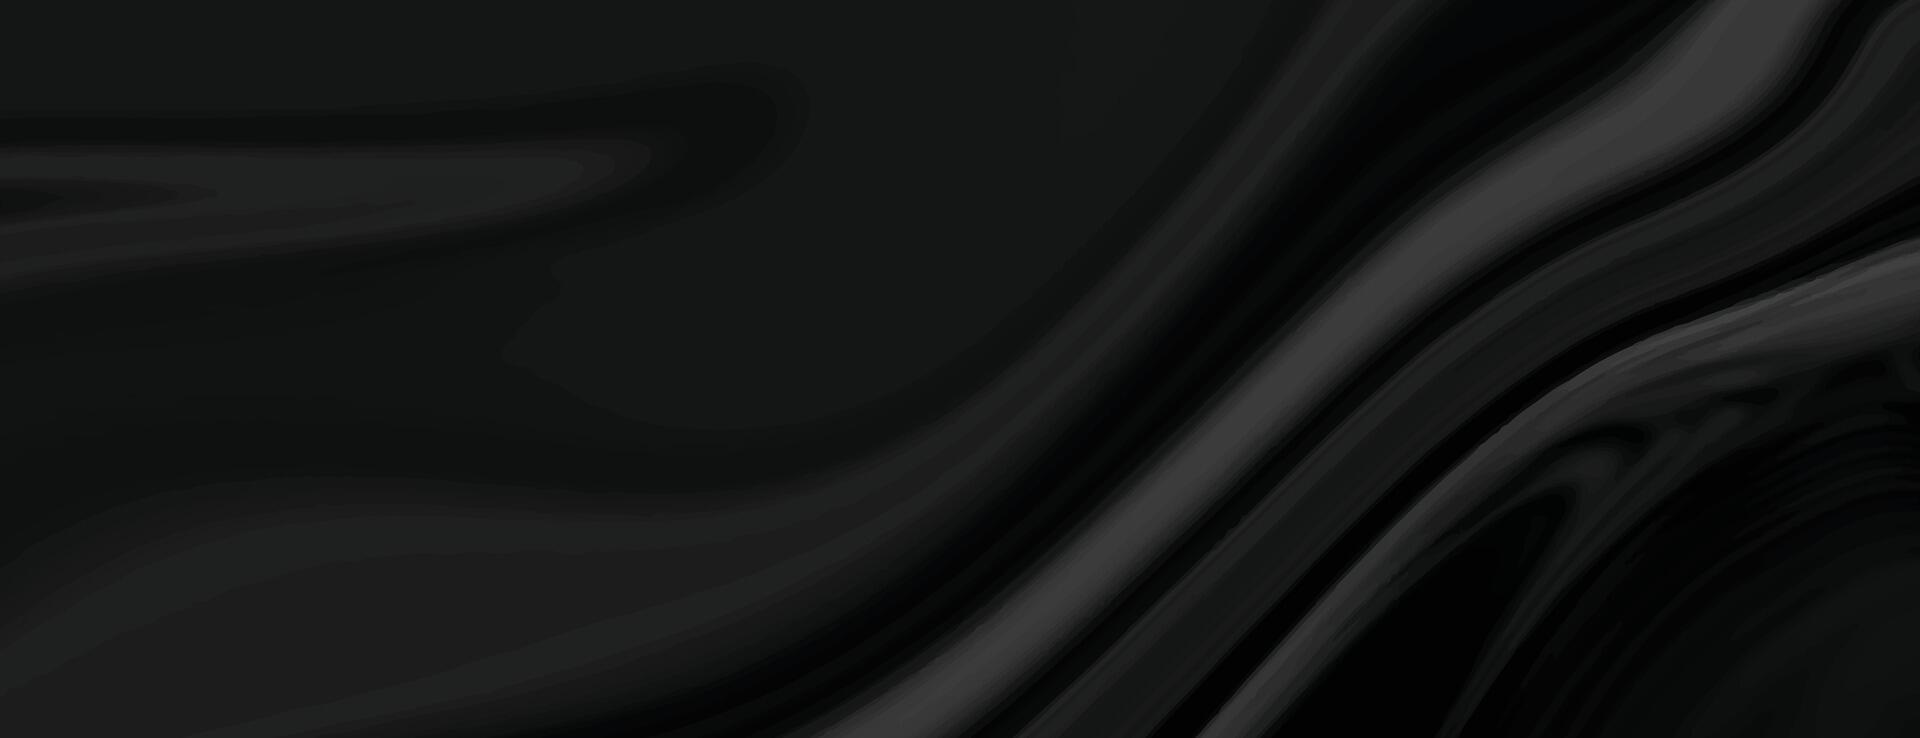 dark black fluid marble texture wallpaper for modern backdrop vector